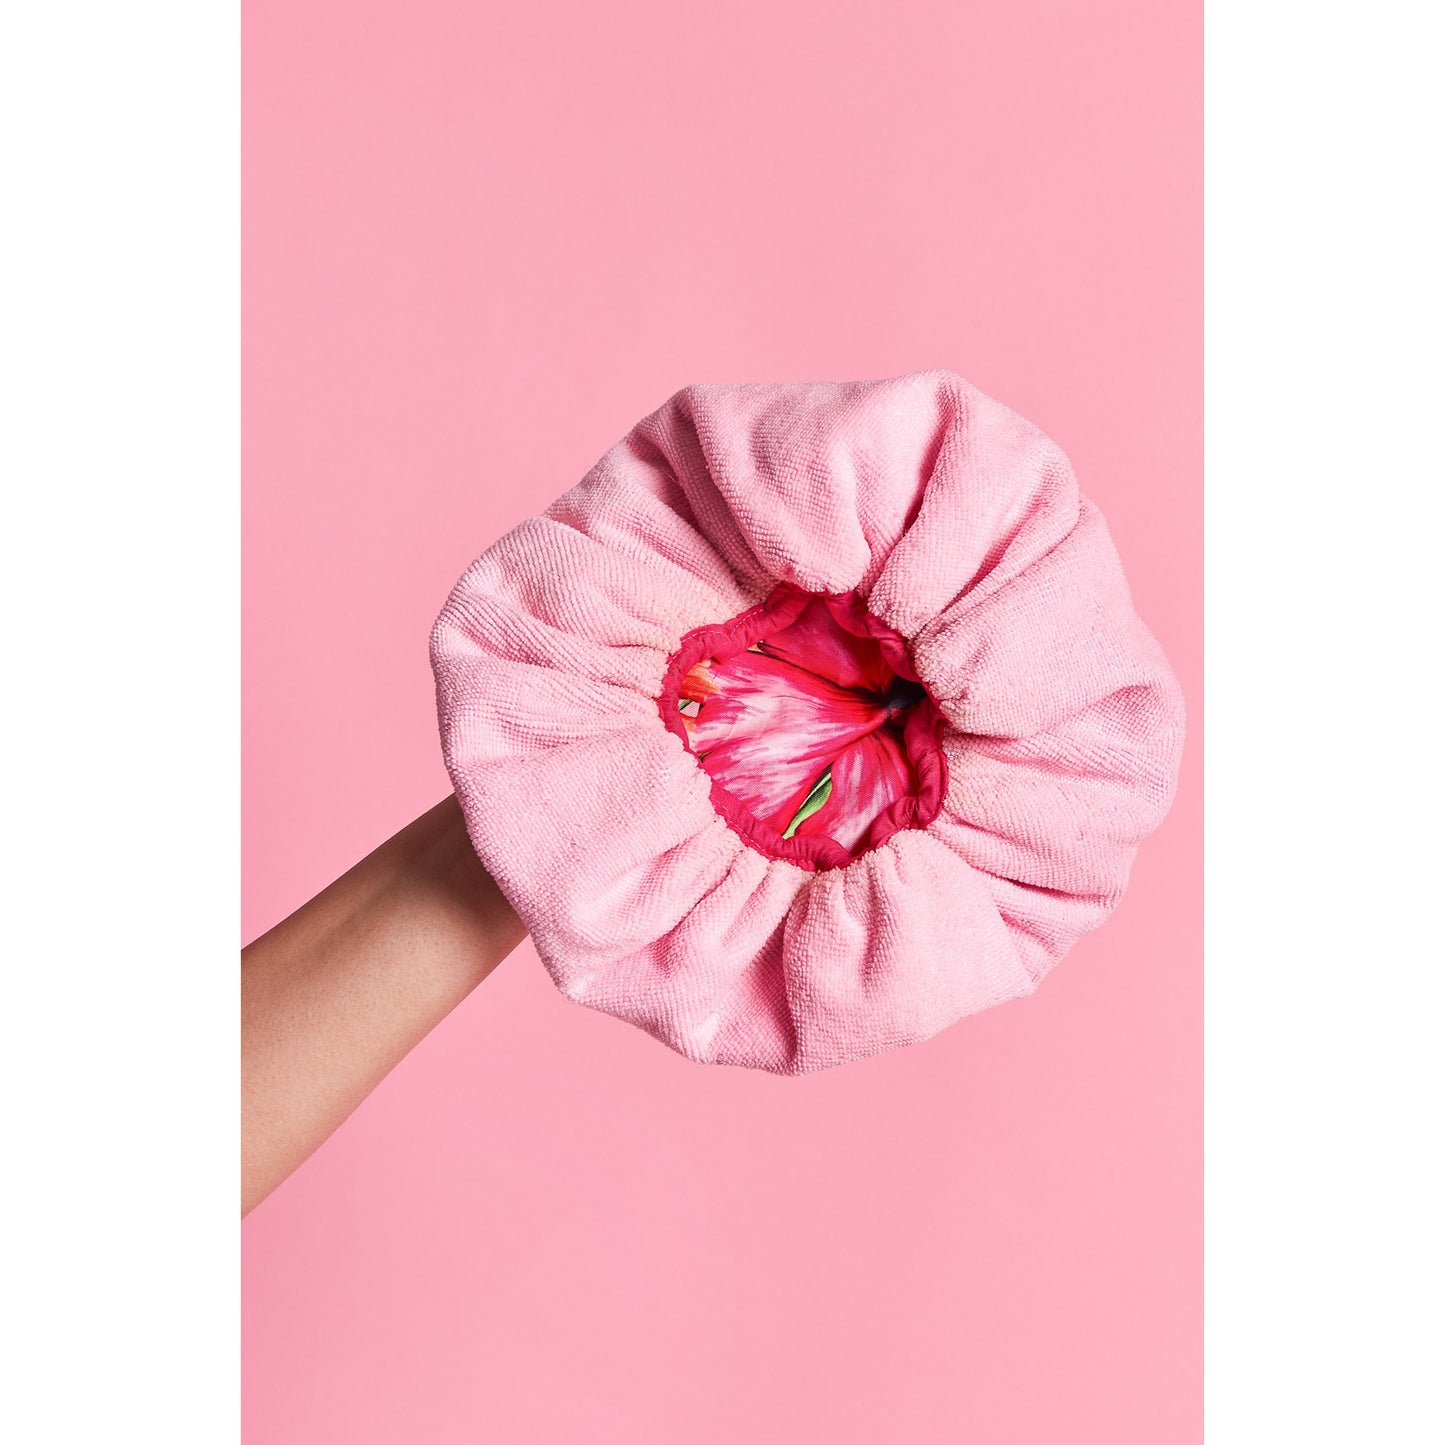 Flora & Curl - Insulated Shower Cap